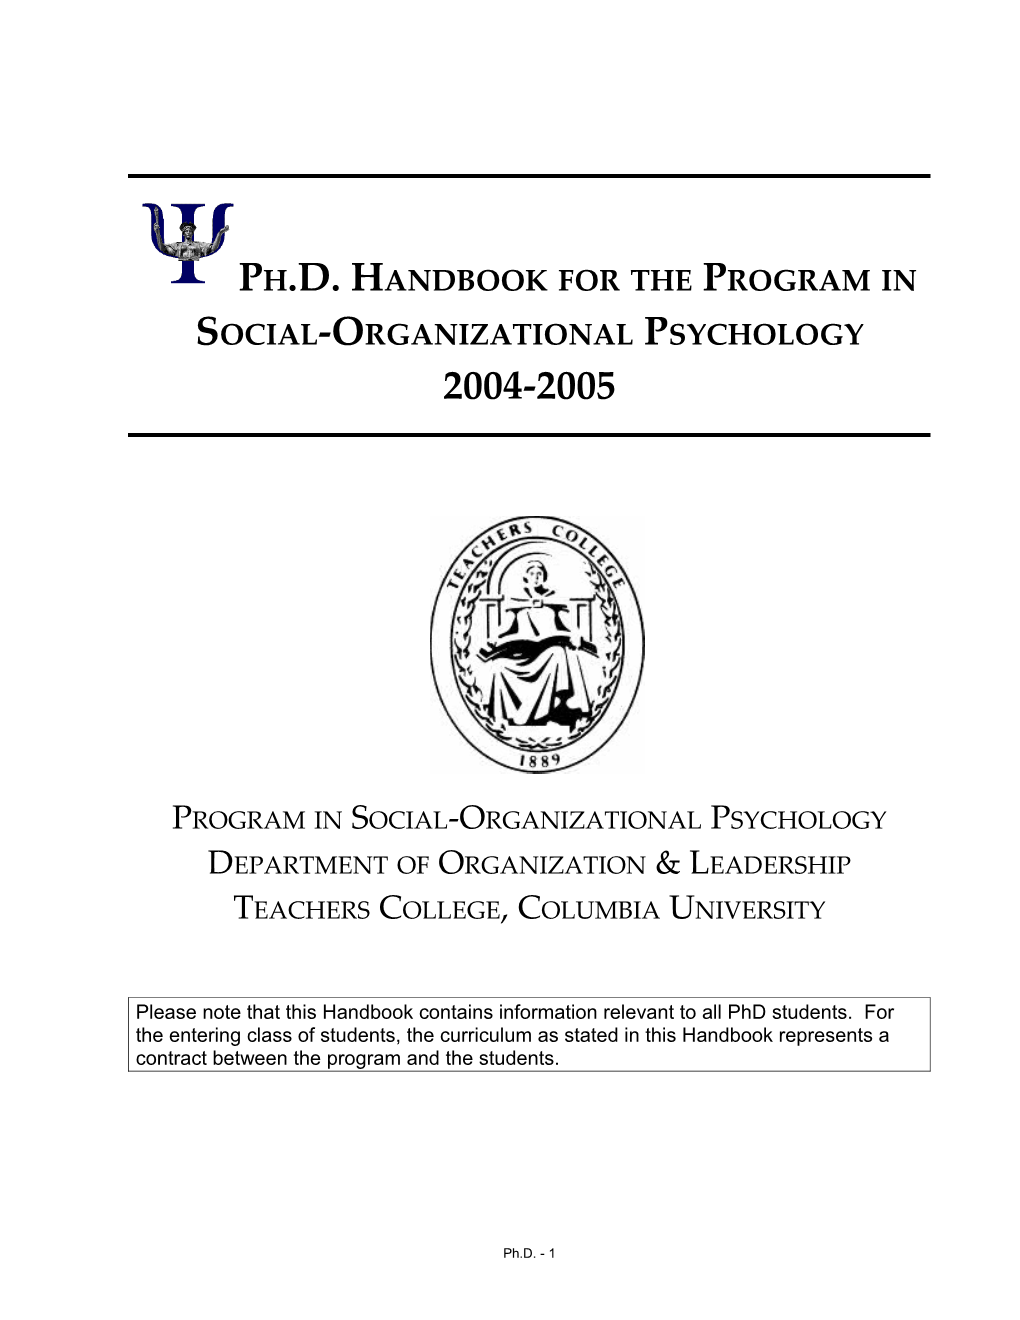 Program In Social-Organizational Psychology